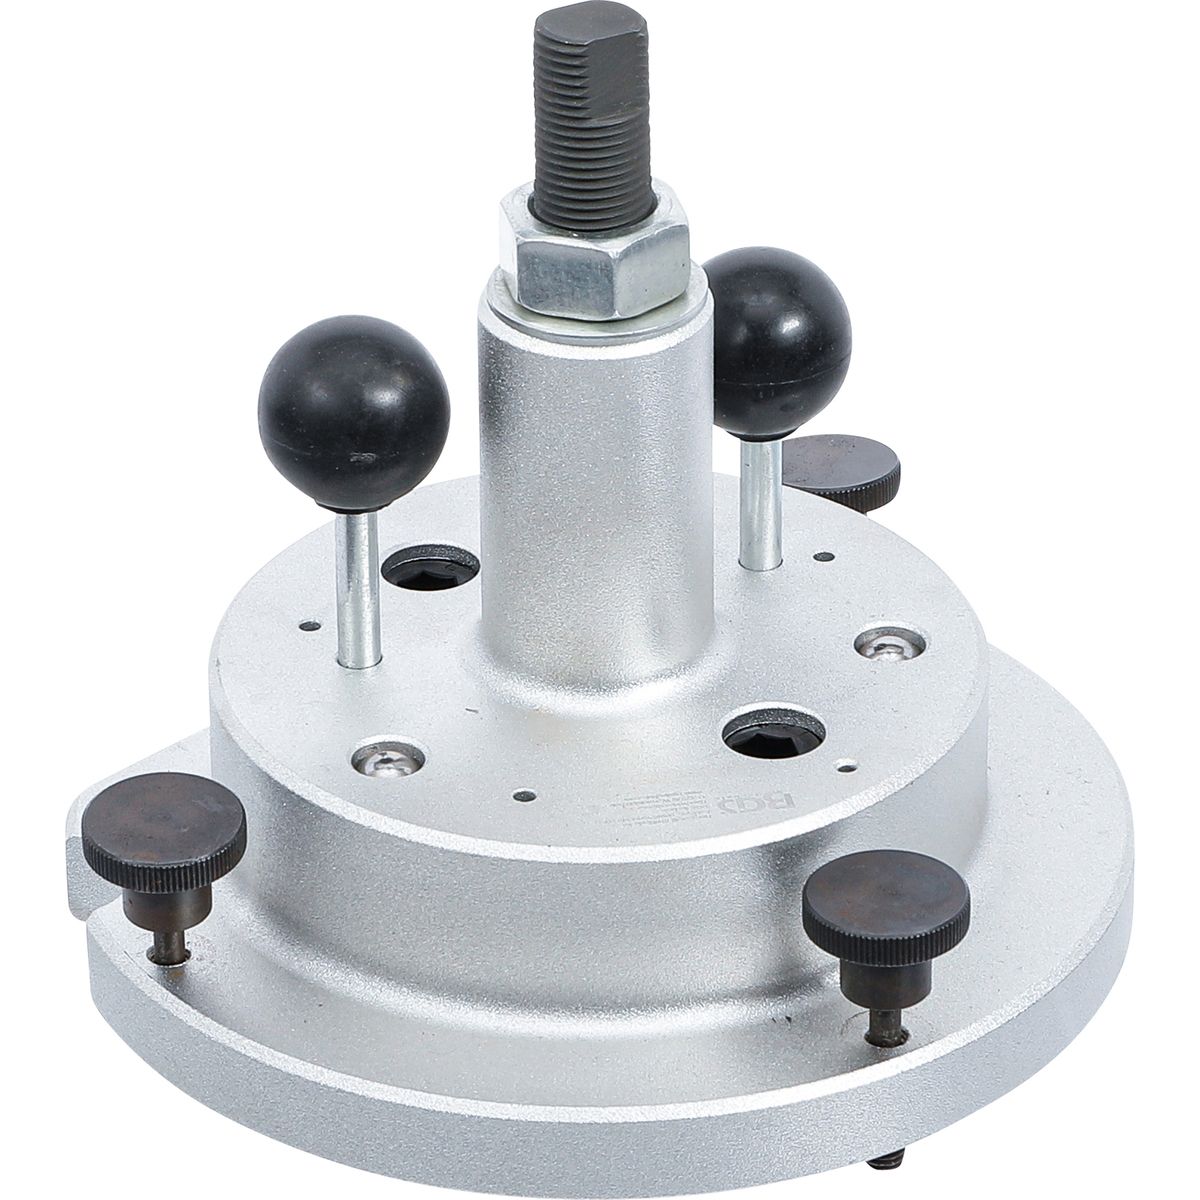 Crankshaft Seal Ring Assembling Tool | for VAG Petrol & Diesel Engines